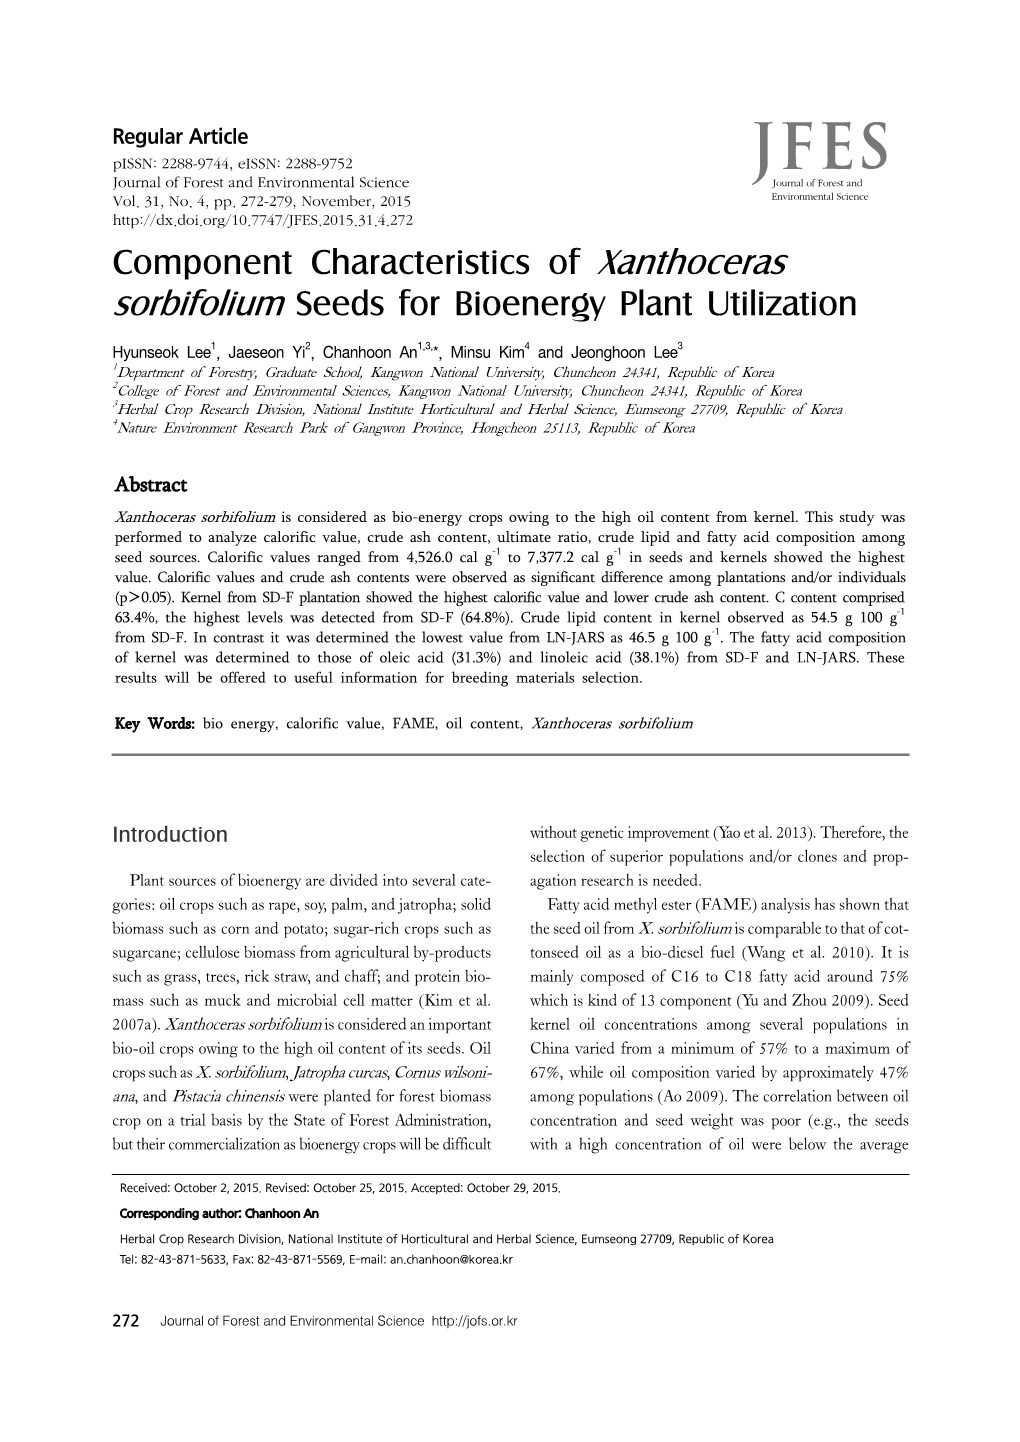 Component Characteristics of Xanthoceras Sorbifolium Seeds for Bioenergy Plant Utilization